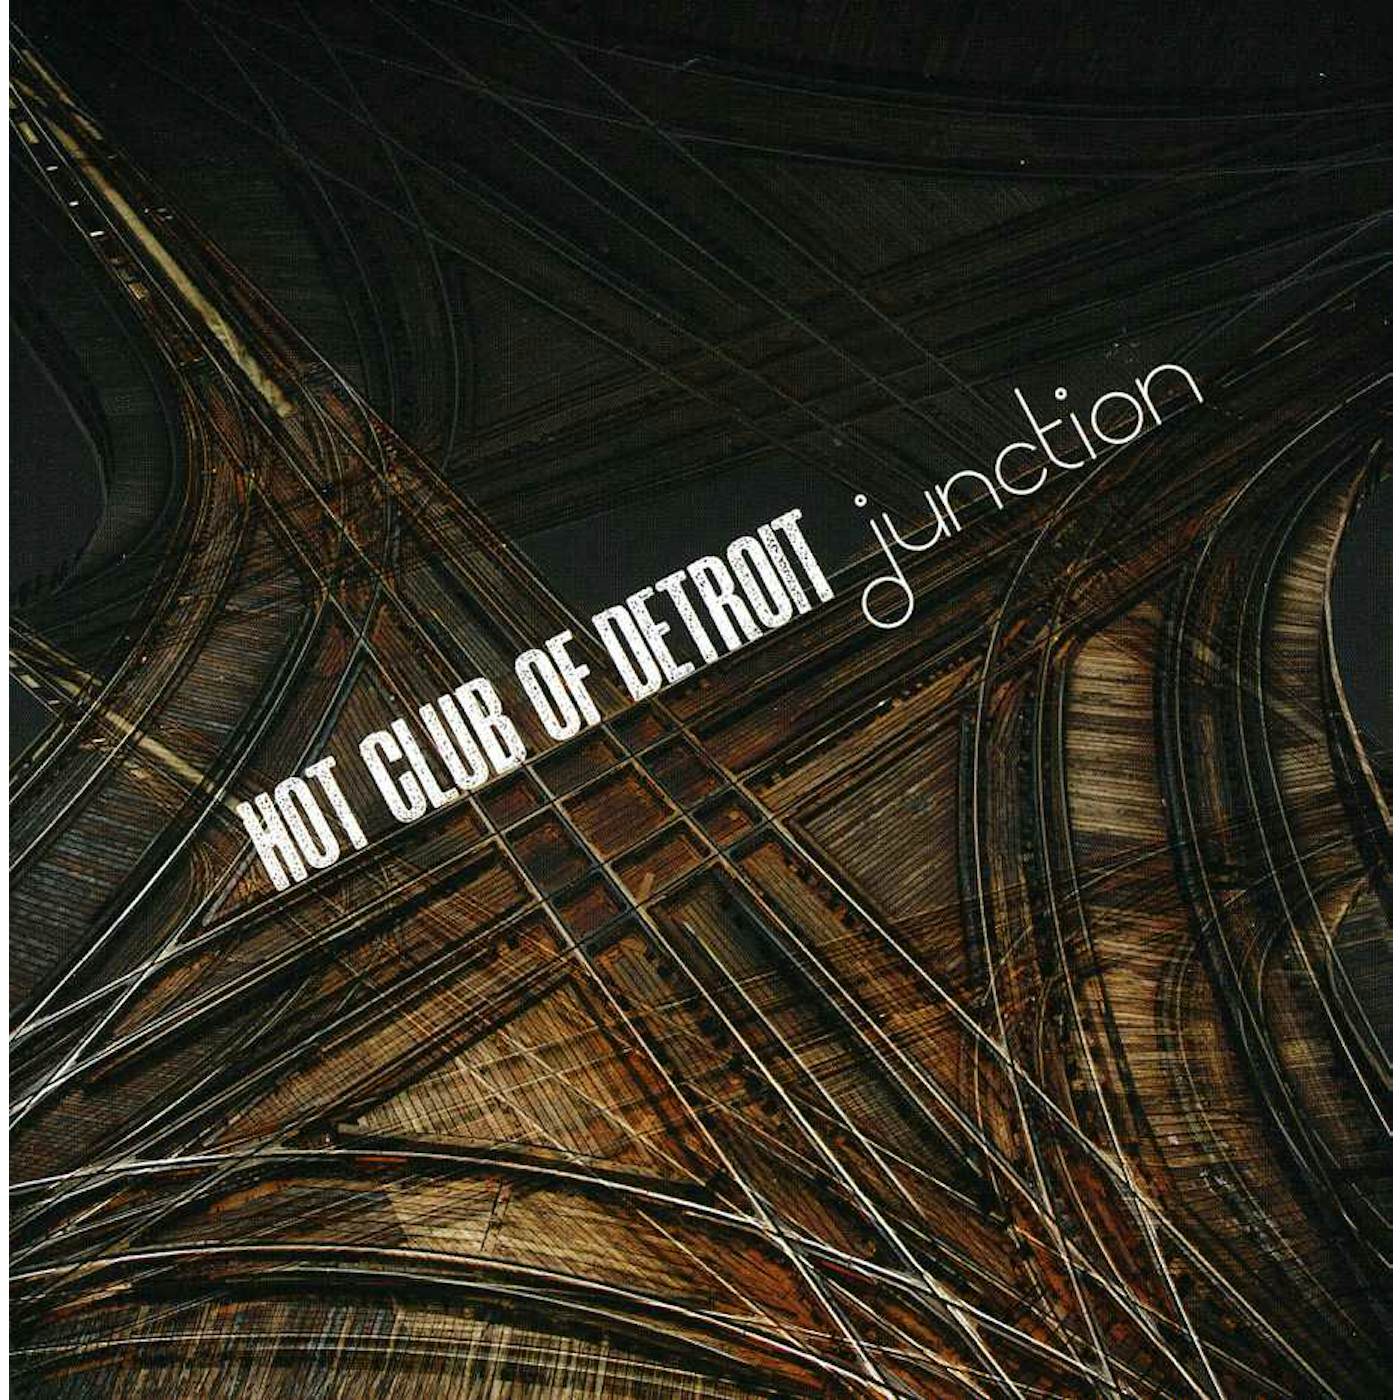 Hot Club of Detroit JUNCTION CD